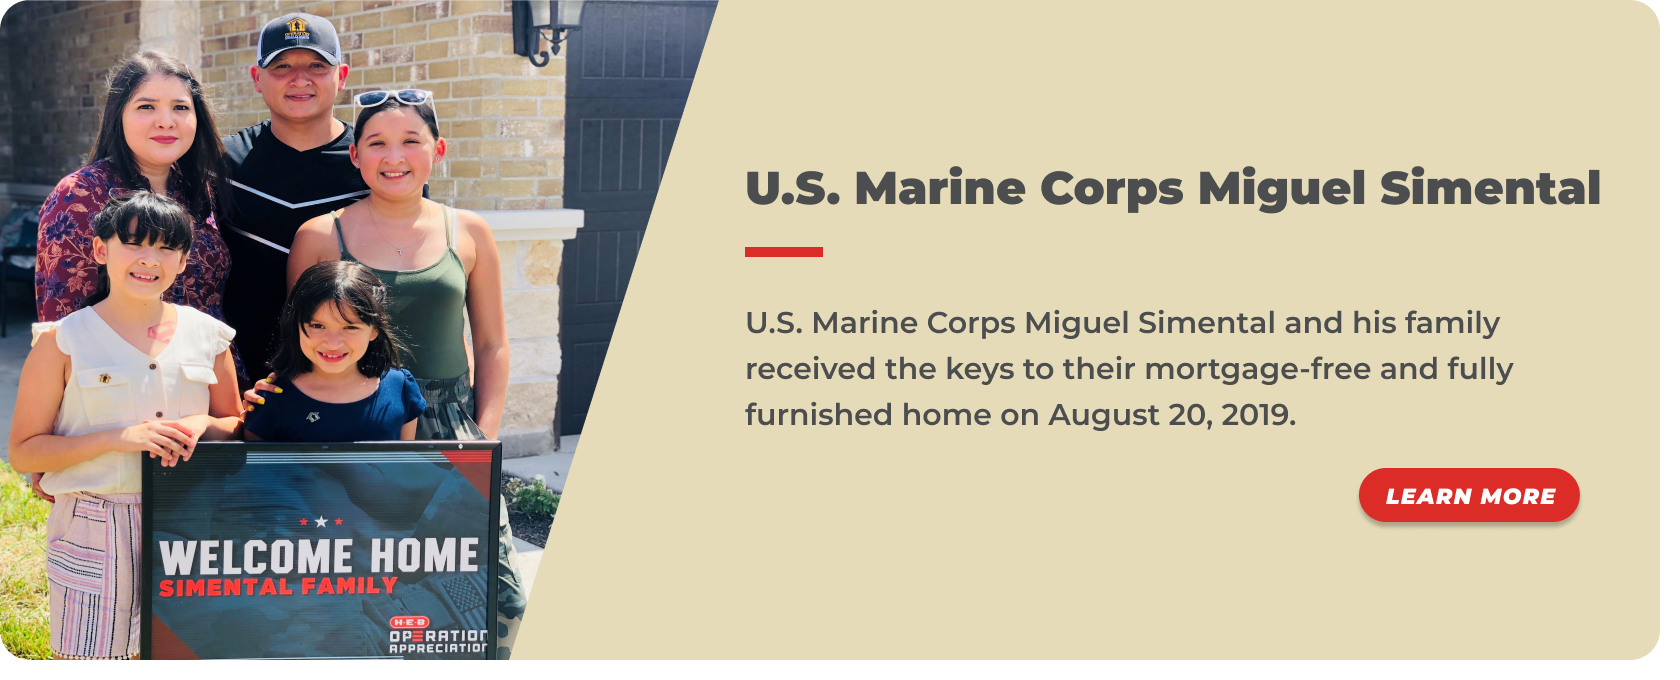 26 -U.S. Marine Corps Miguel Simental